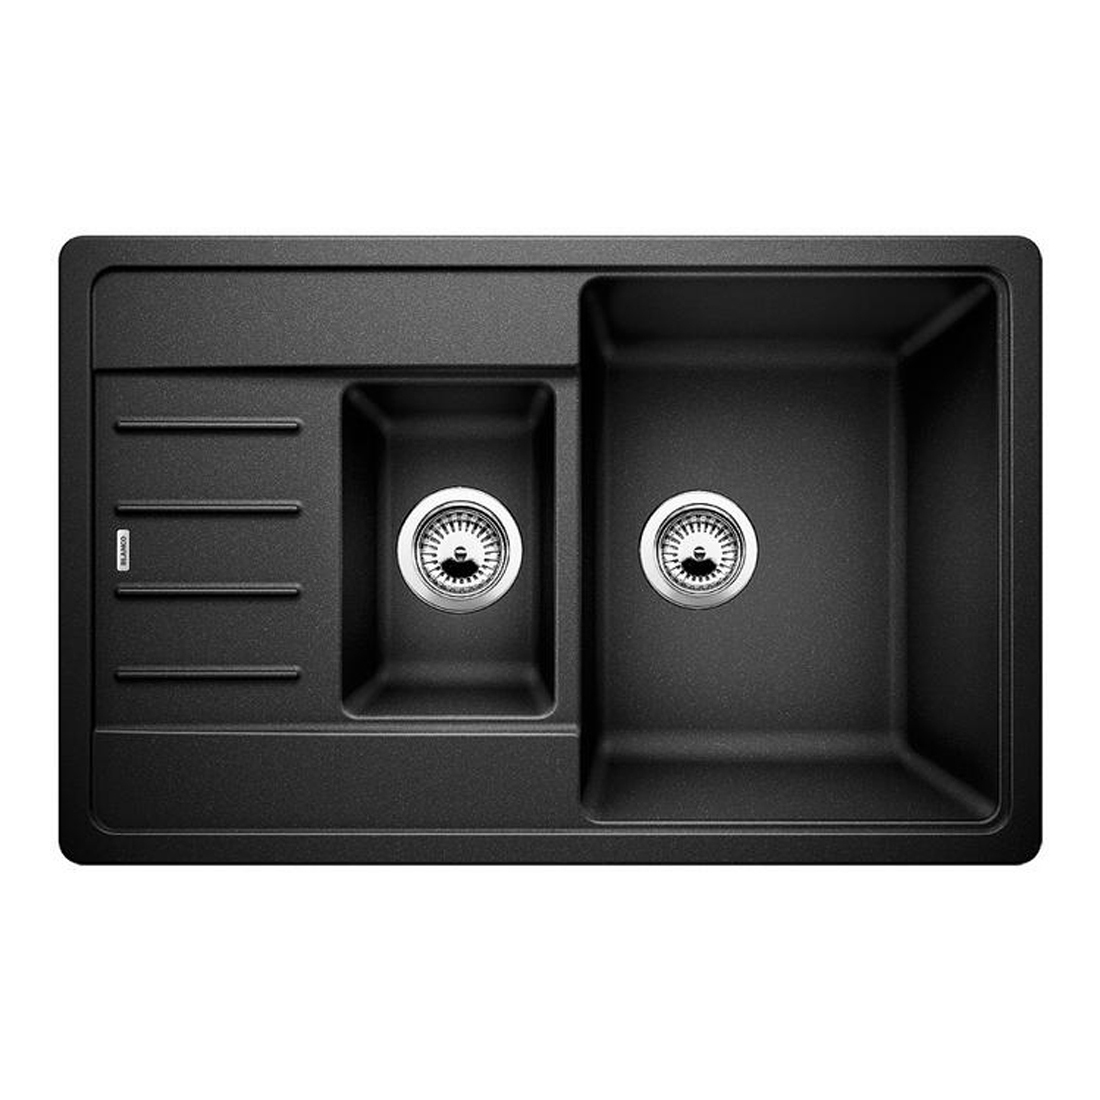 Кухонная мойка Blanco Legra 6 S Compact антрацит кухонная мойка blanco metra 6 s compact антрацит